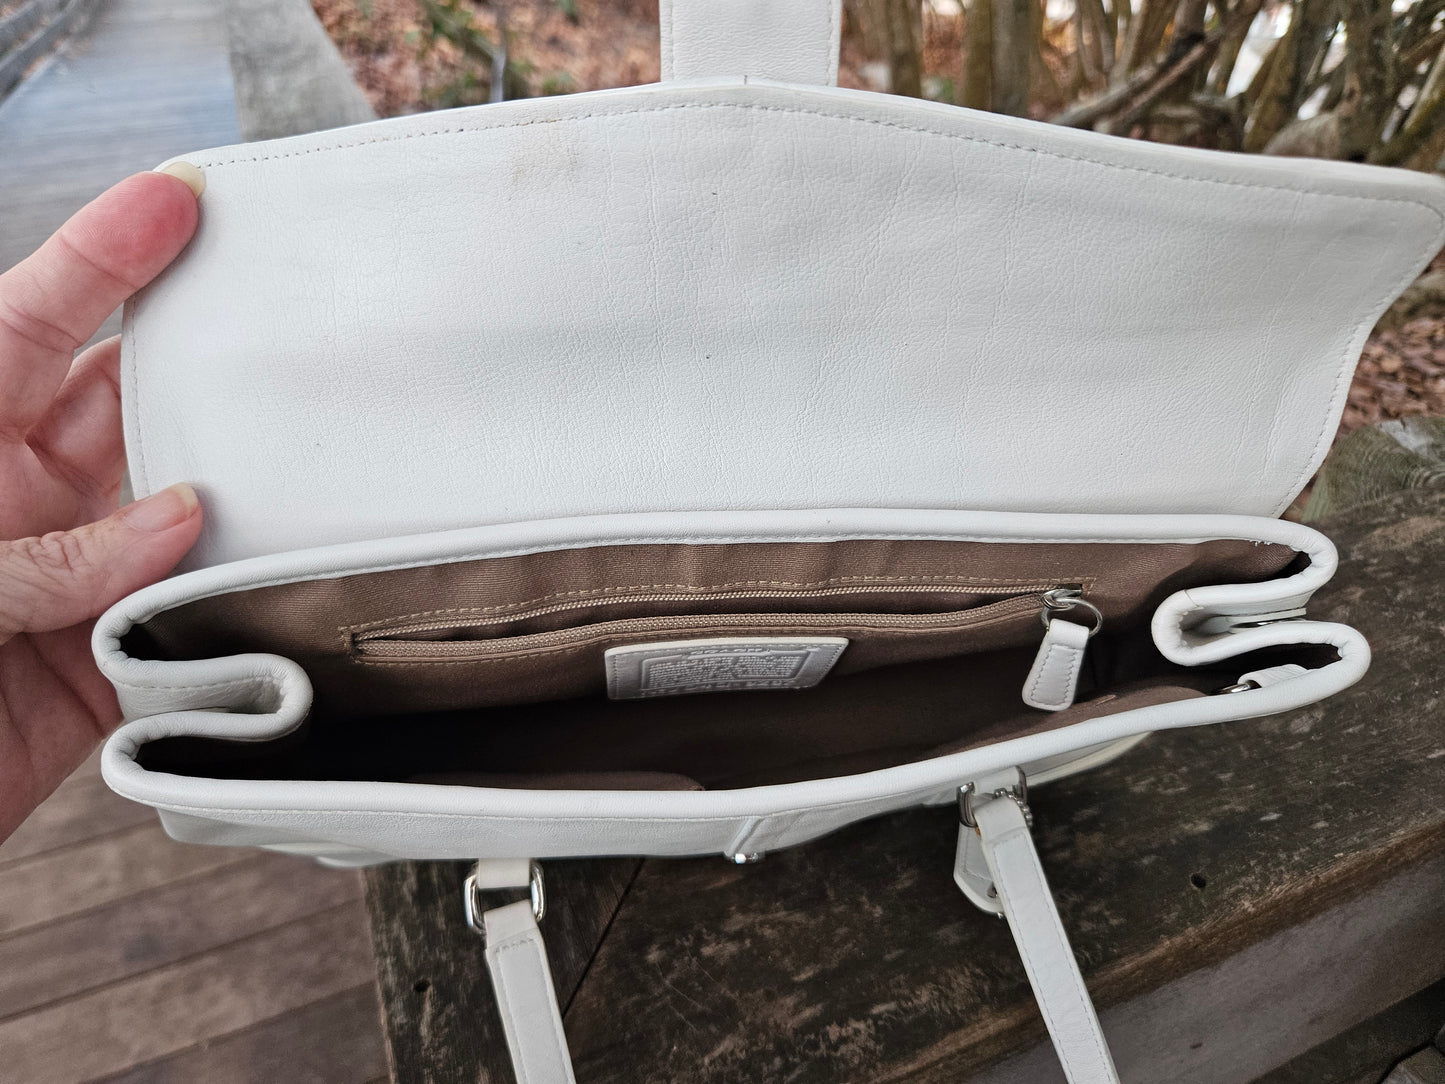 COACH Top Handle Satchel Handbag White Leather - LUXURY PREOWNED